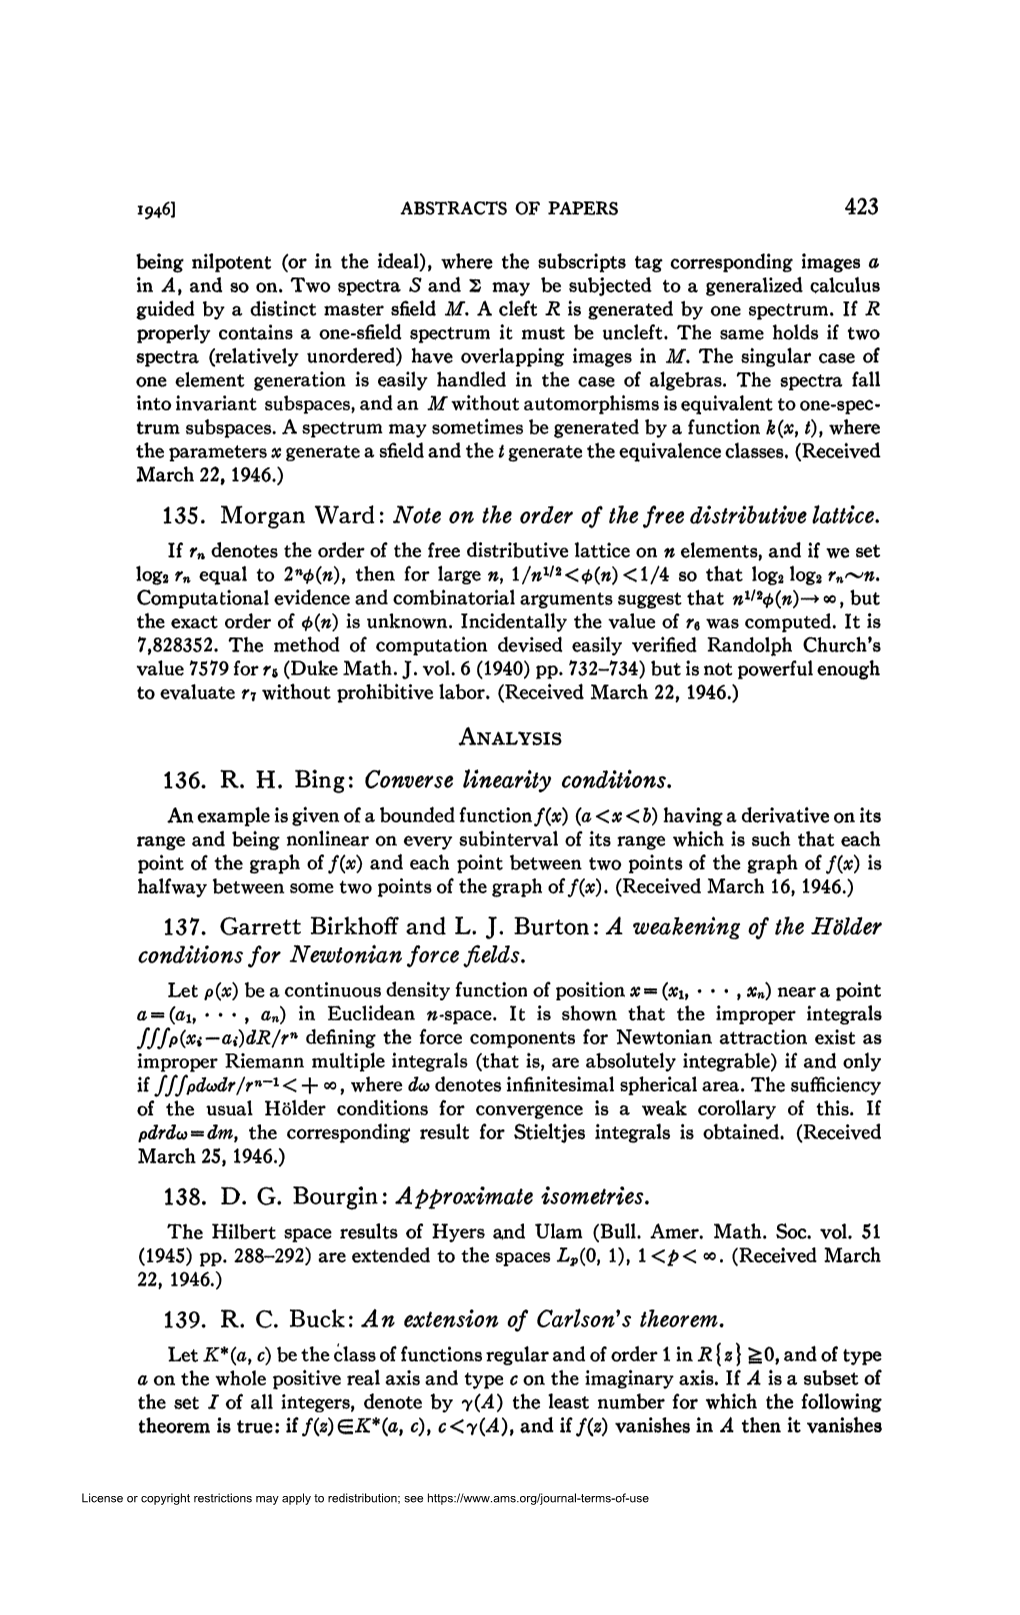 135. Morgan Ward: Note on the Order of the Free Distributive Lattice. 136